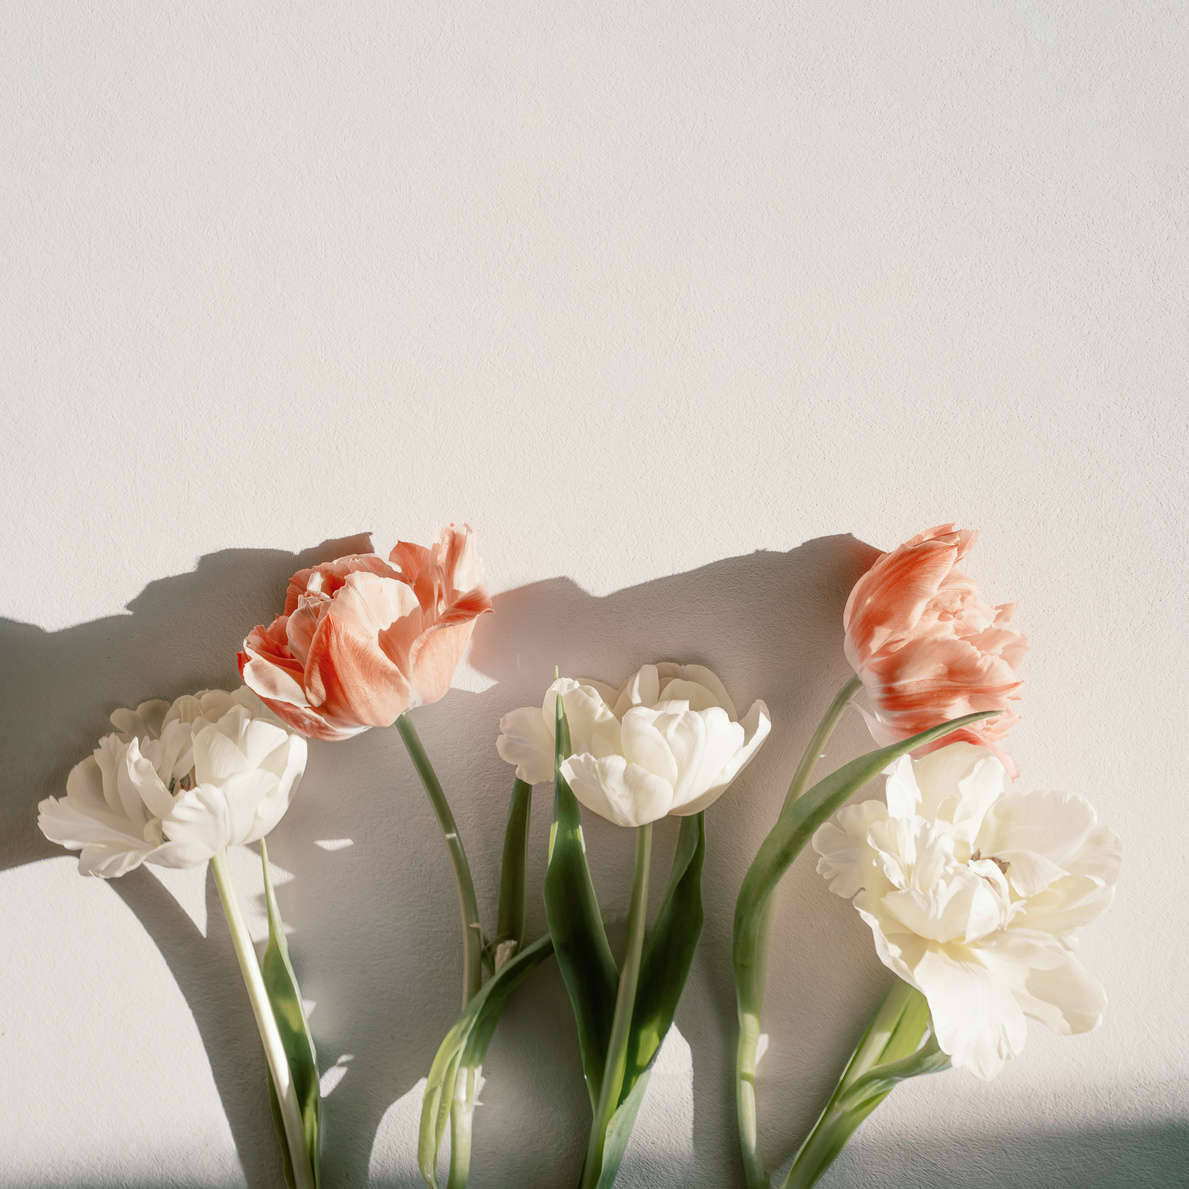 Aesthetic flower flatlay in sunlight, minimal beige background, copy space